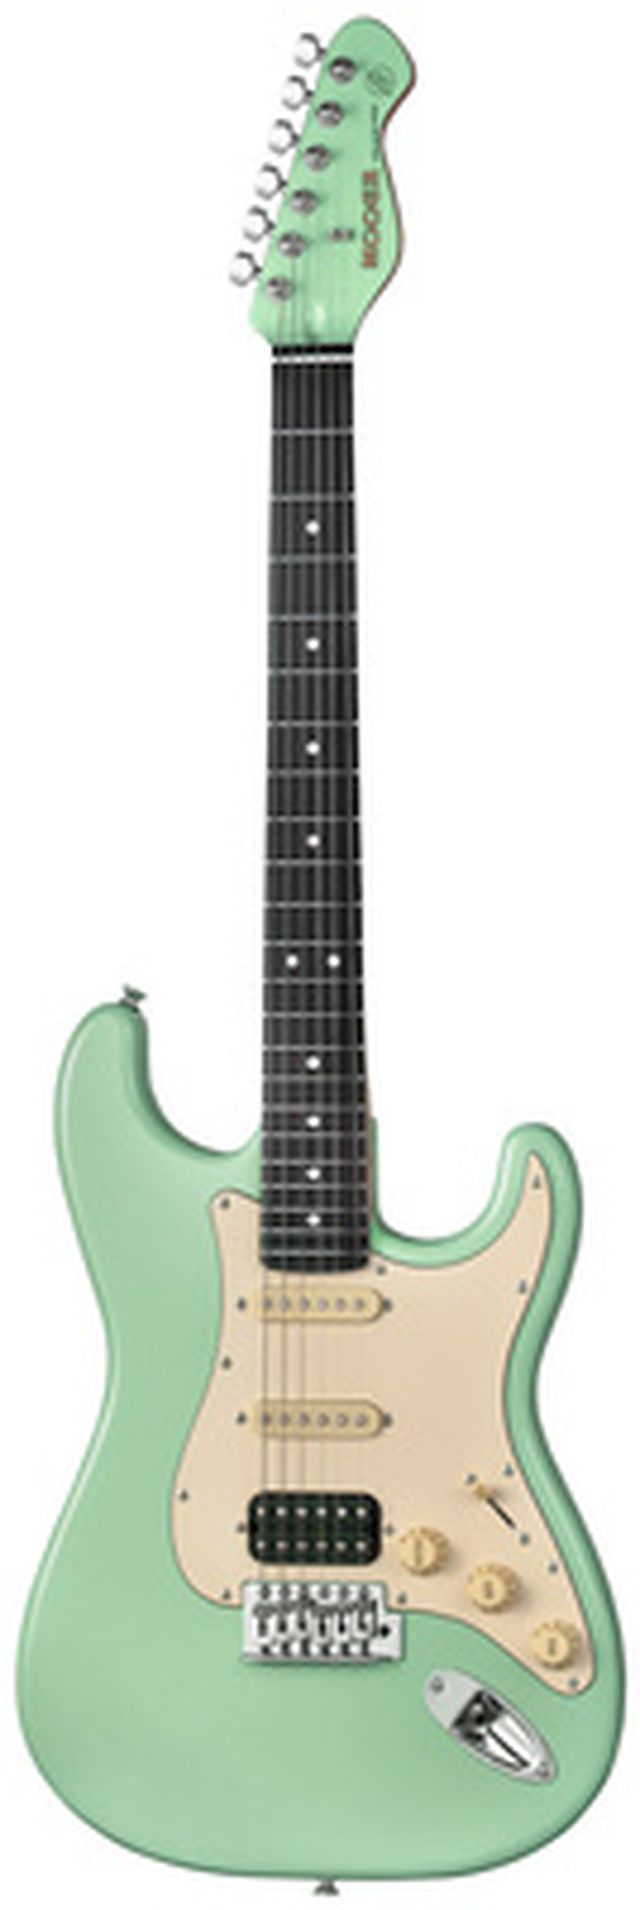 Mooer MSC10 Pro Guitar Surf Green